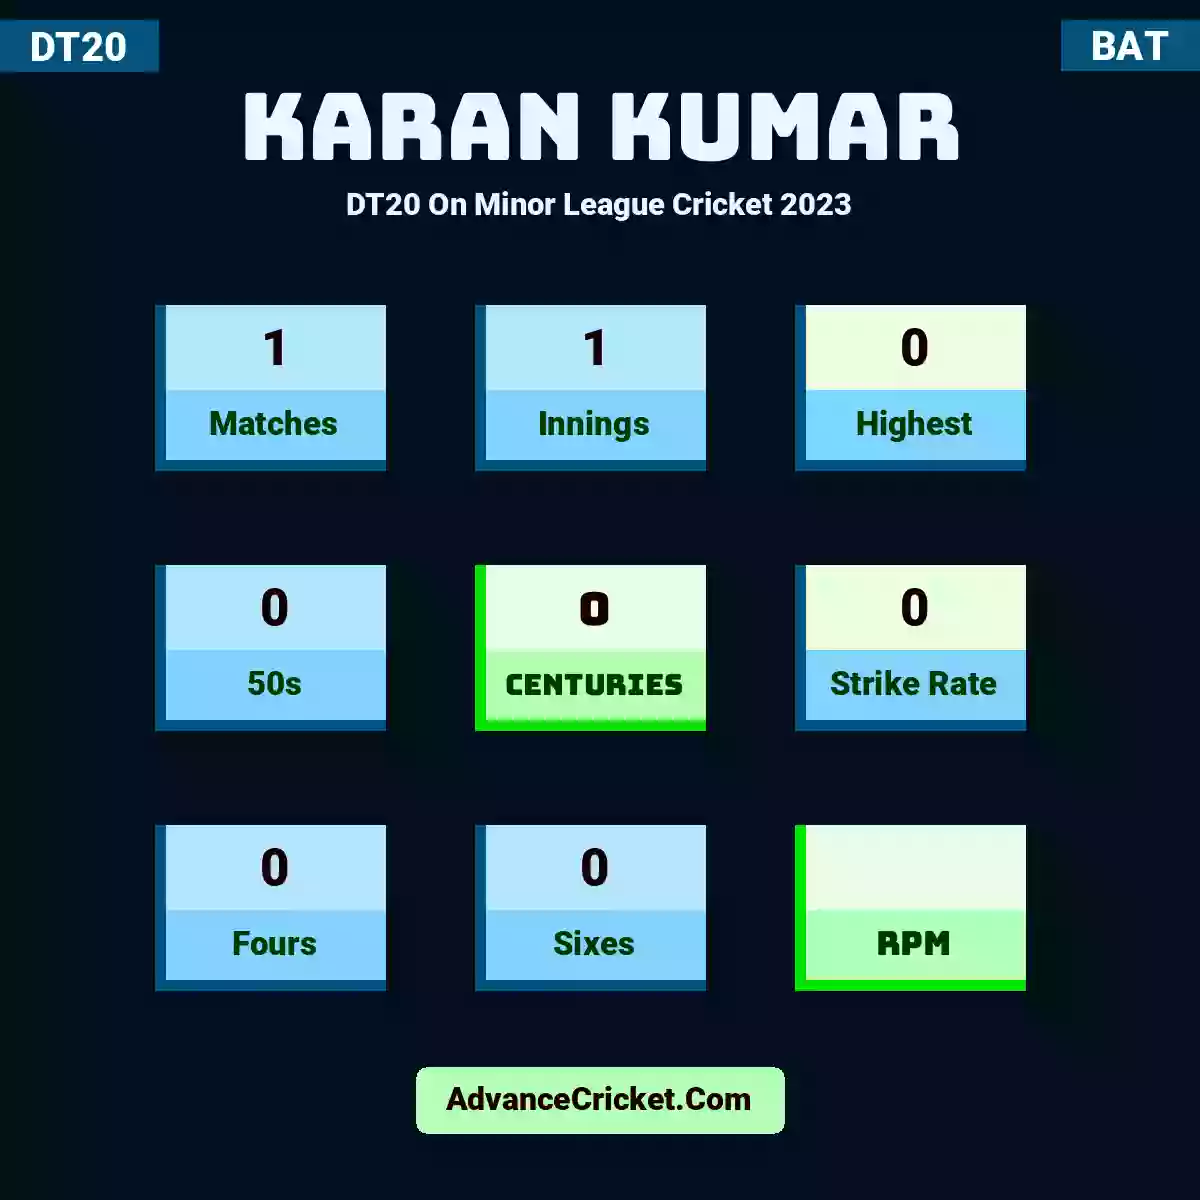 Karan Kumar DT20  On Minor League Cricket 2023, Karan Kumar played 1 matches, scored 0 runs as highest, 0 half-centuries, and 0 centuries, with a strike rate of 0. K.Kumar hit 0 fours and 0 sixes.